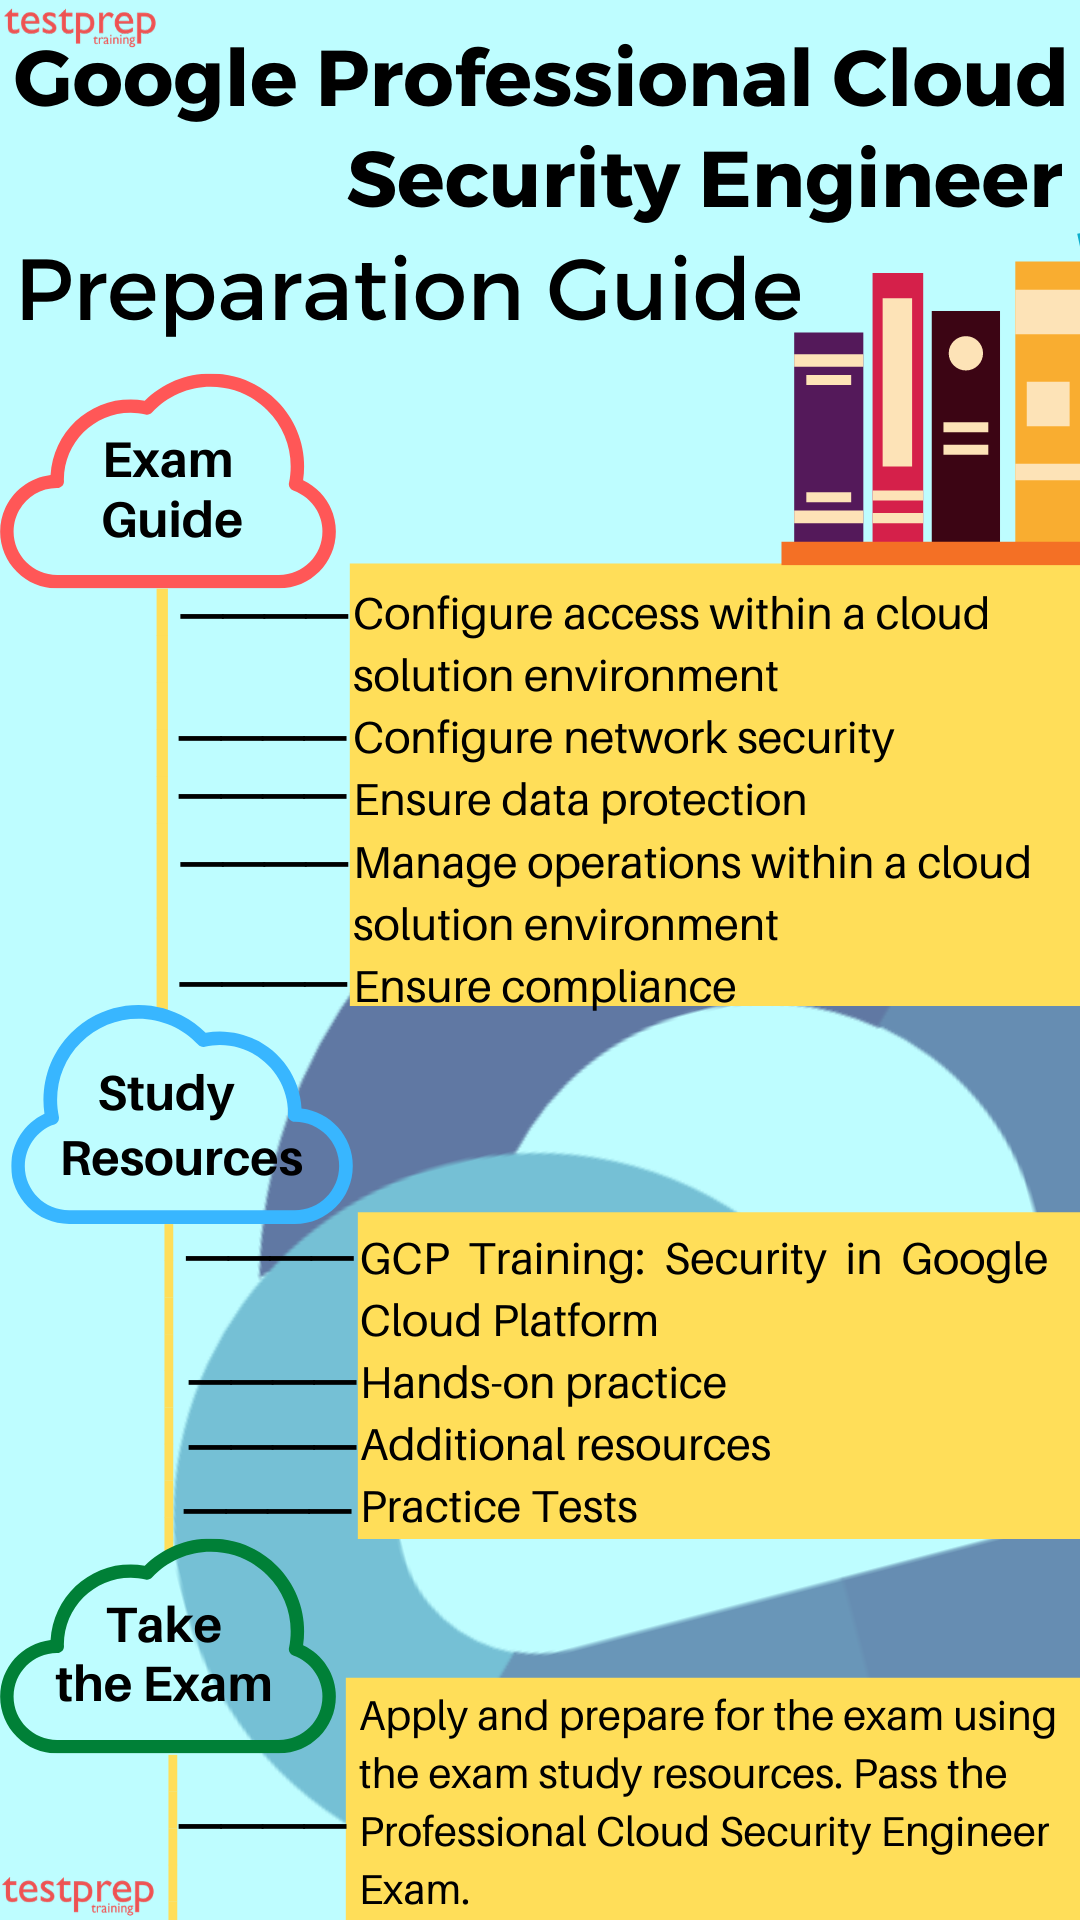 Google Professional Cloud Security Engineer - Testprep Training Tutorials